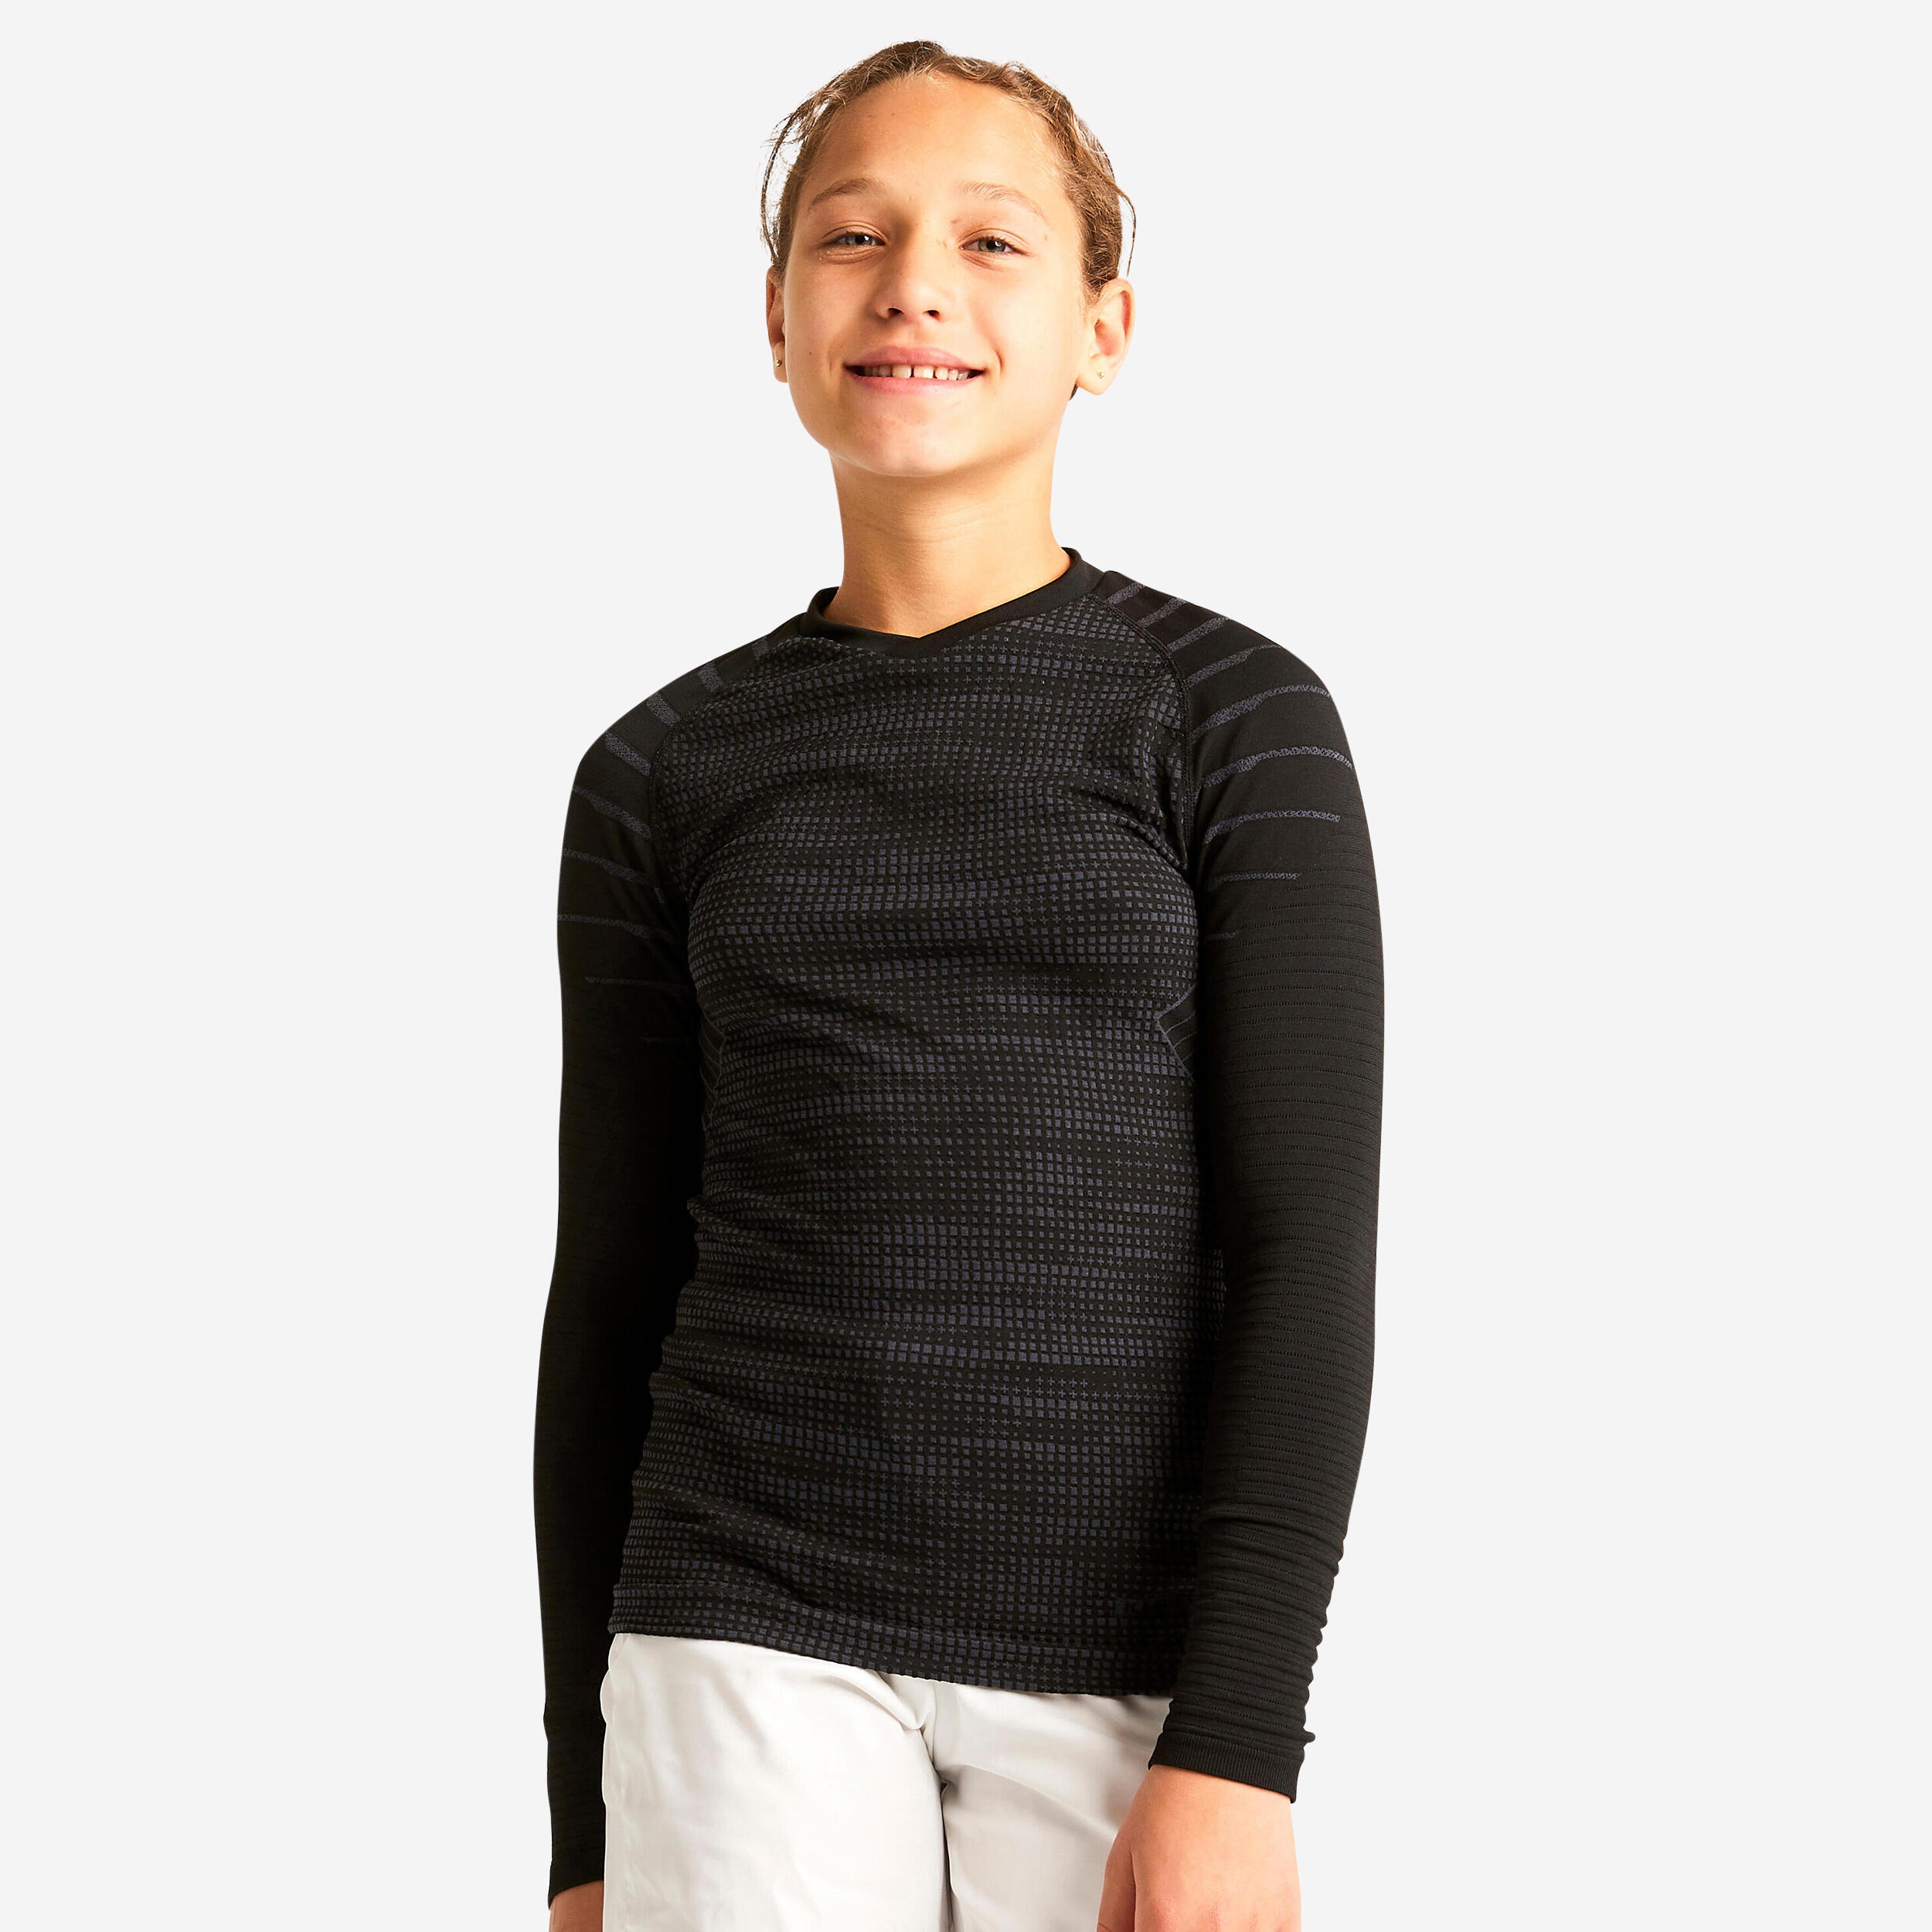 Image of Kids' Long-Sleeved Thermal Base Layer Top - Keepdry 500 Black